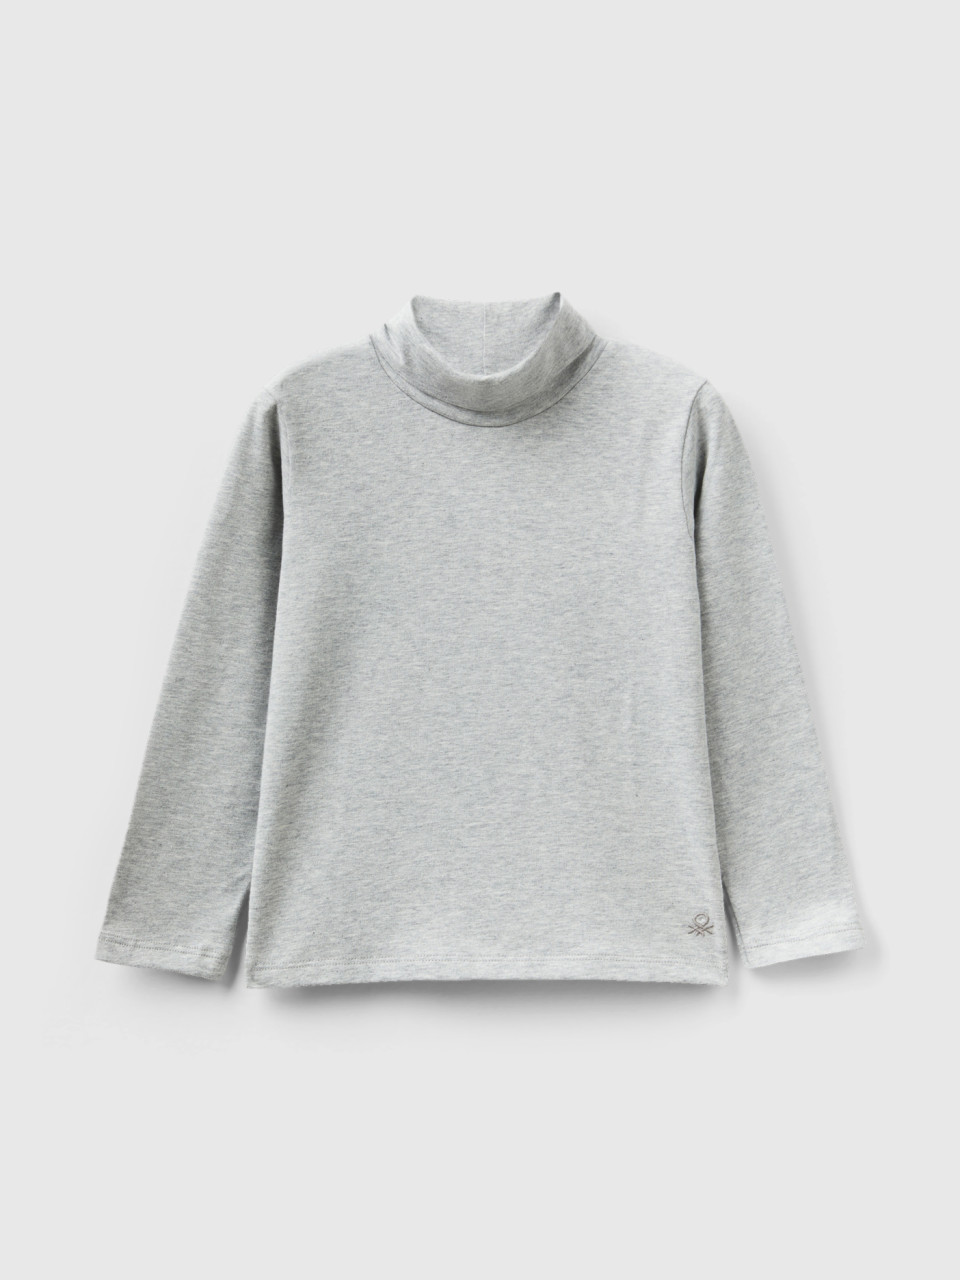 Benetton, Turtleneck T-shirt In Stretch Cotton, Light Gray, Kids